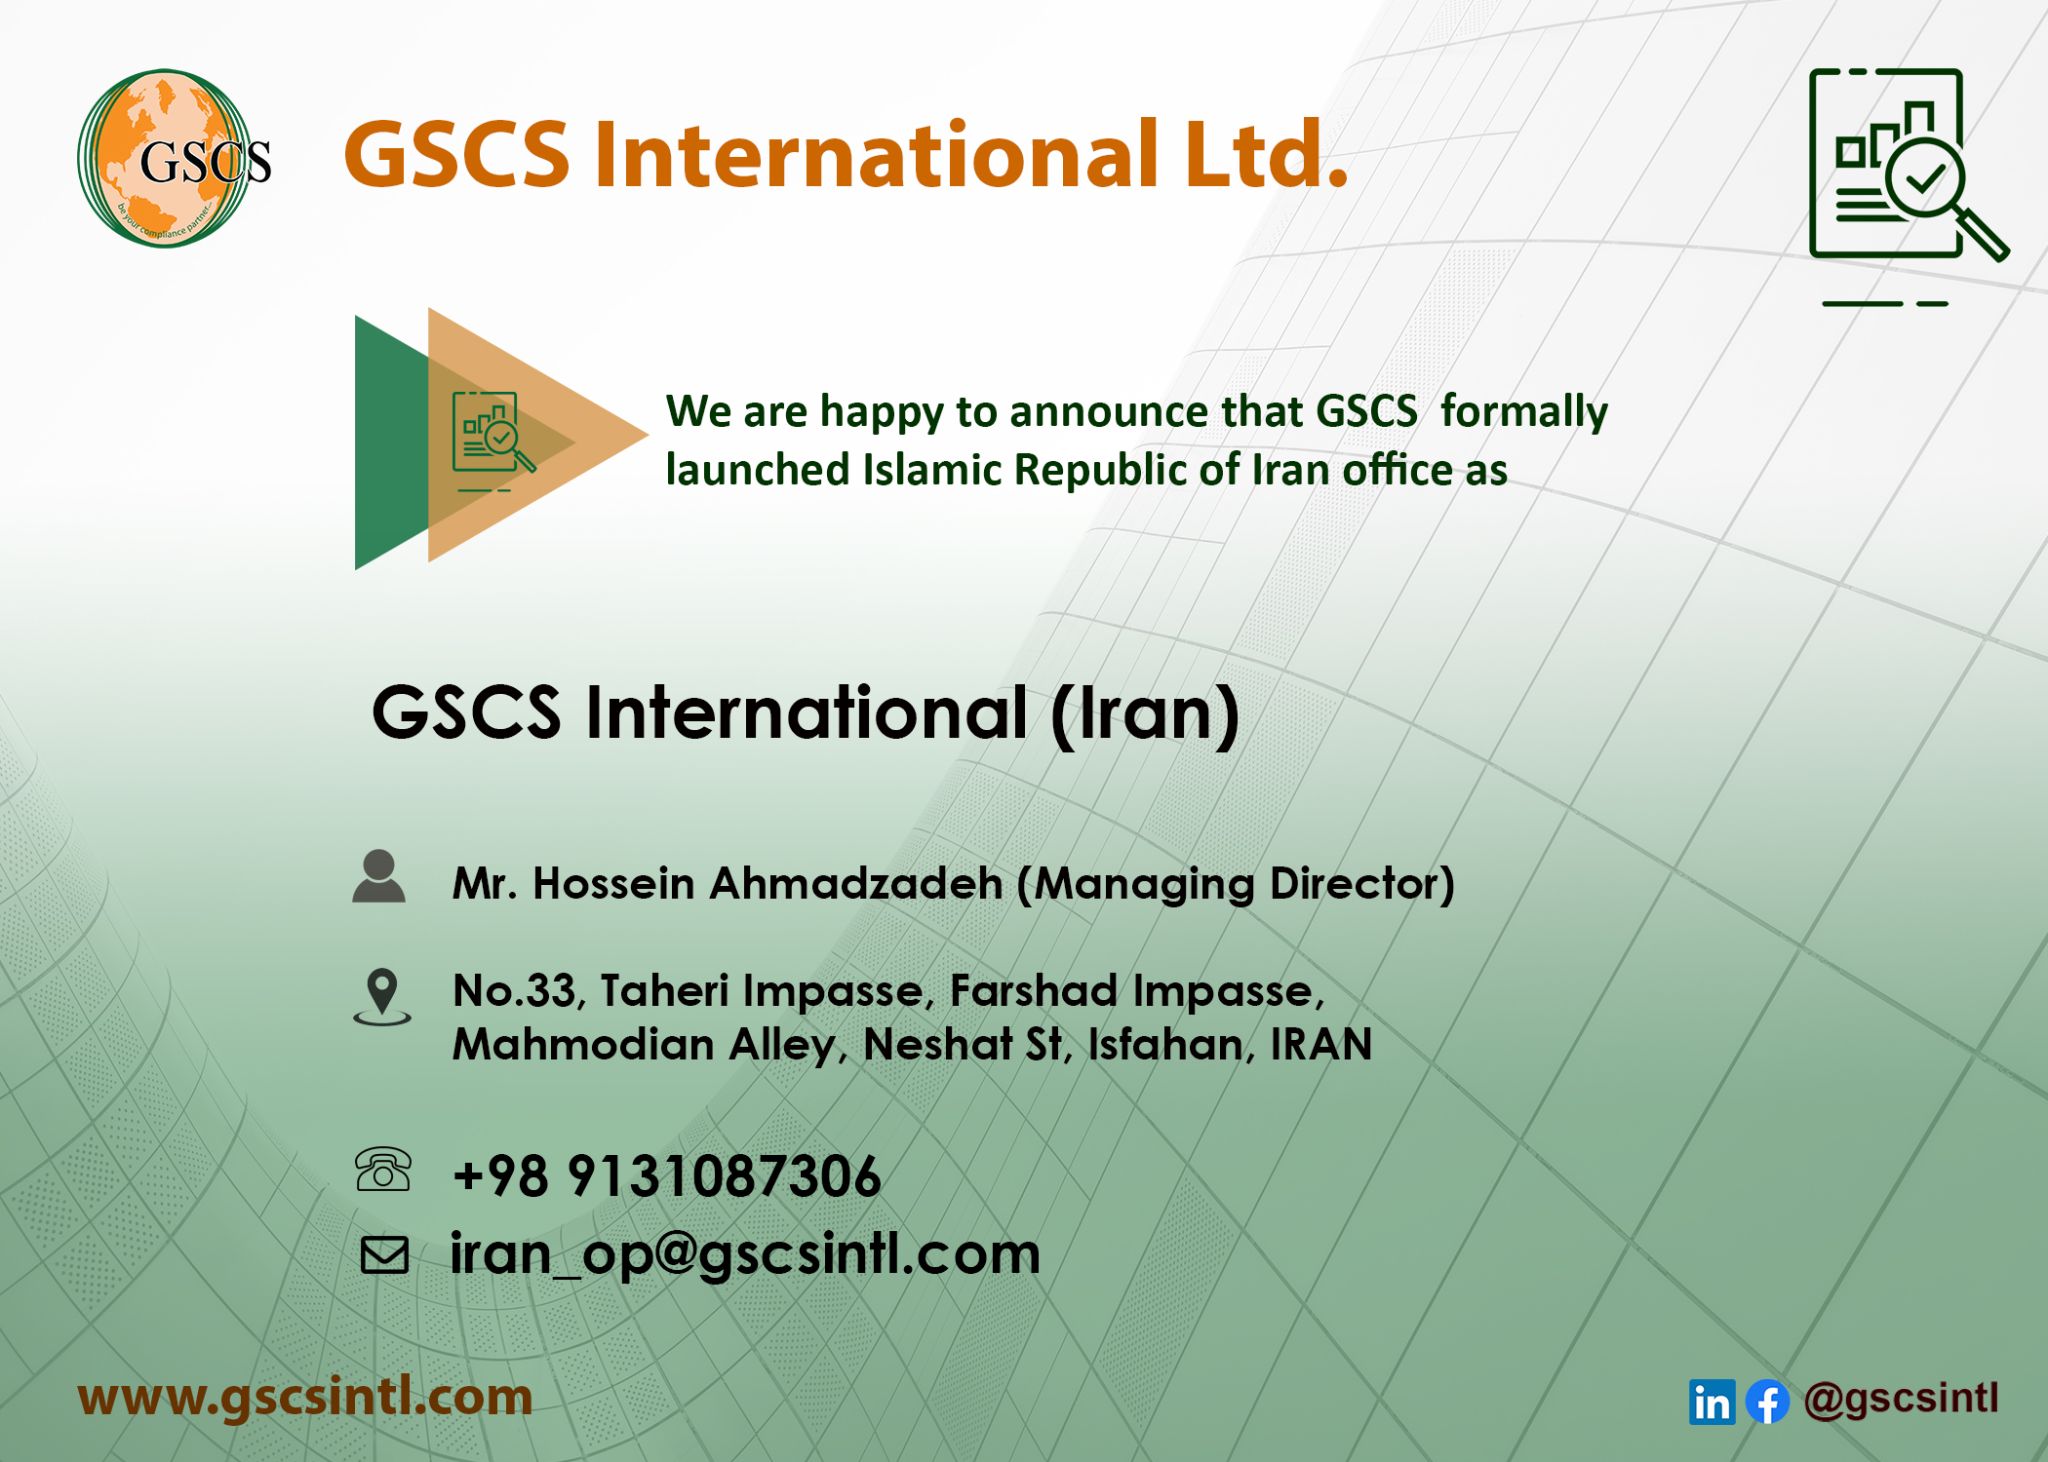 Footprint of GSCS International Ltd. now at Iran